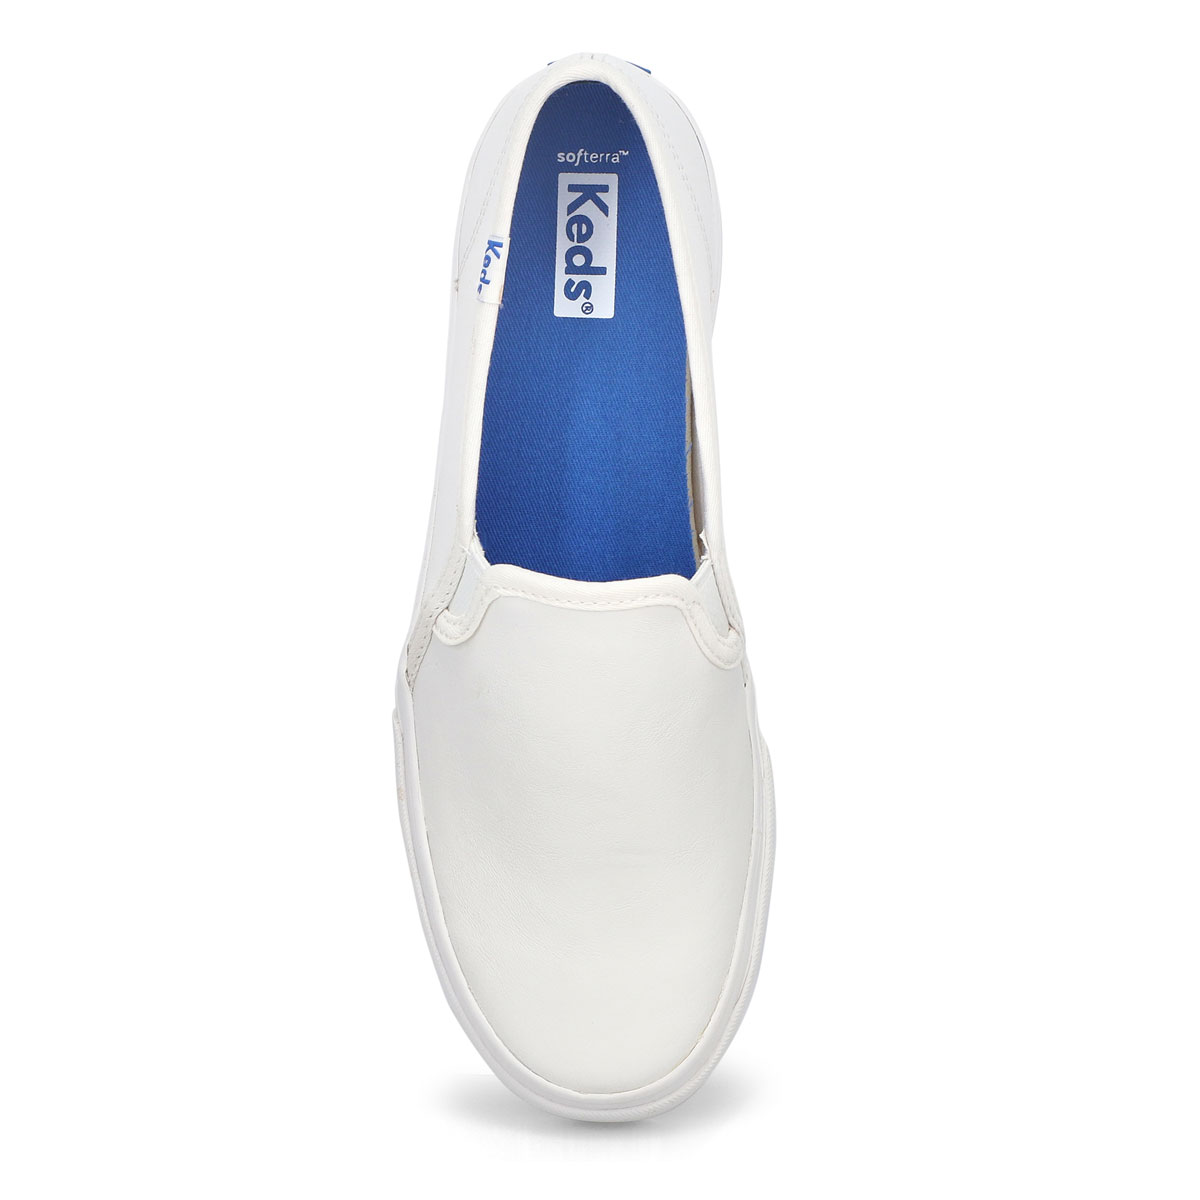 Keds Women's DOUBLE DECKER white slip on snea | SoftMoc.com